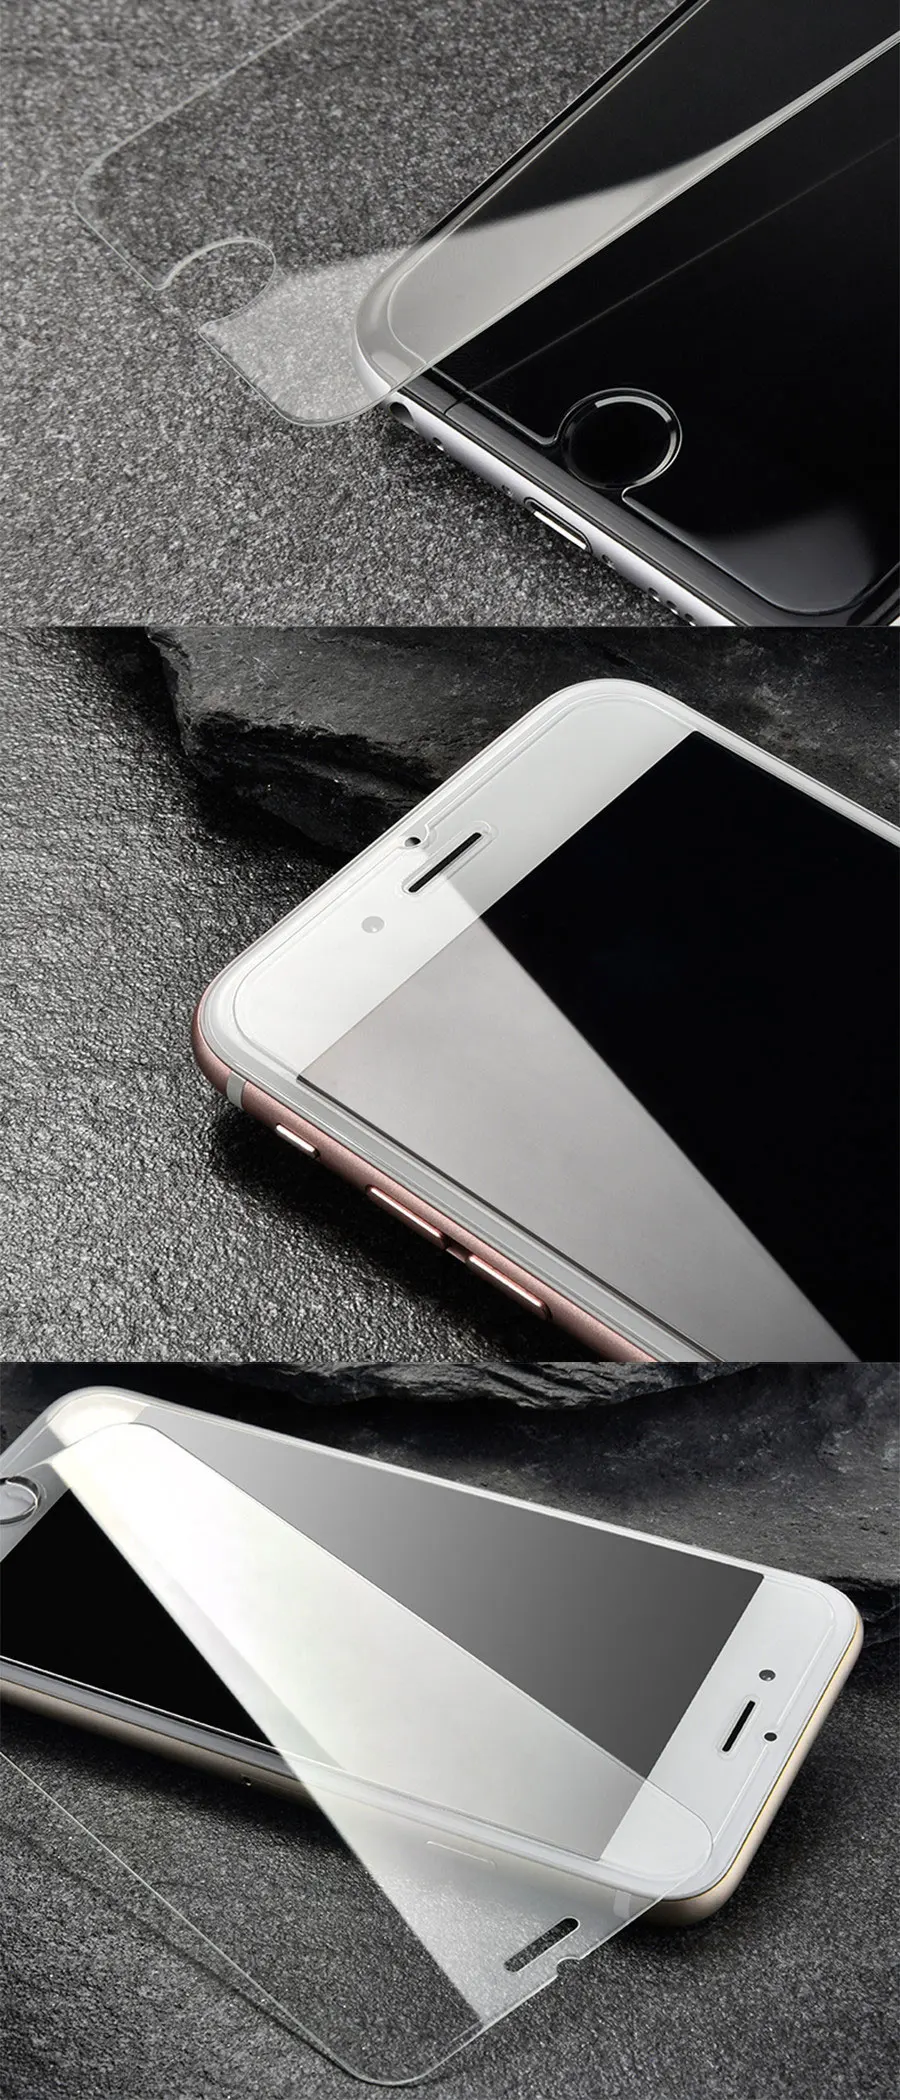 2.5D 9H защита экрана из закаленного стекла для iPhone 6 6S 7 8 Plus SE 5S 5 X Закаленное стекло для iPhone 11 Pro XR XS Max стеклянная пленка